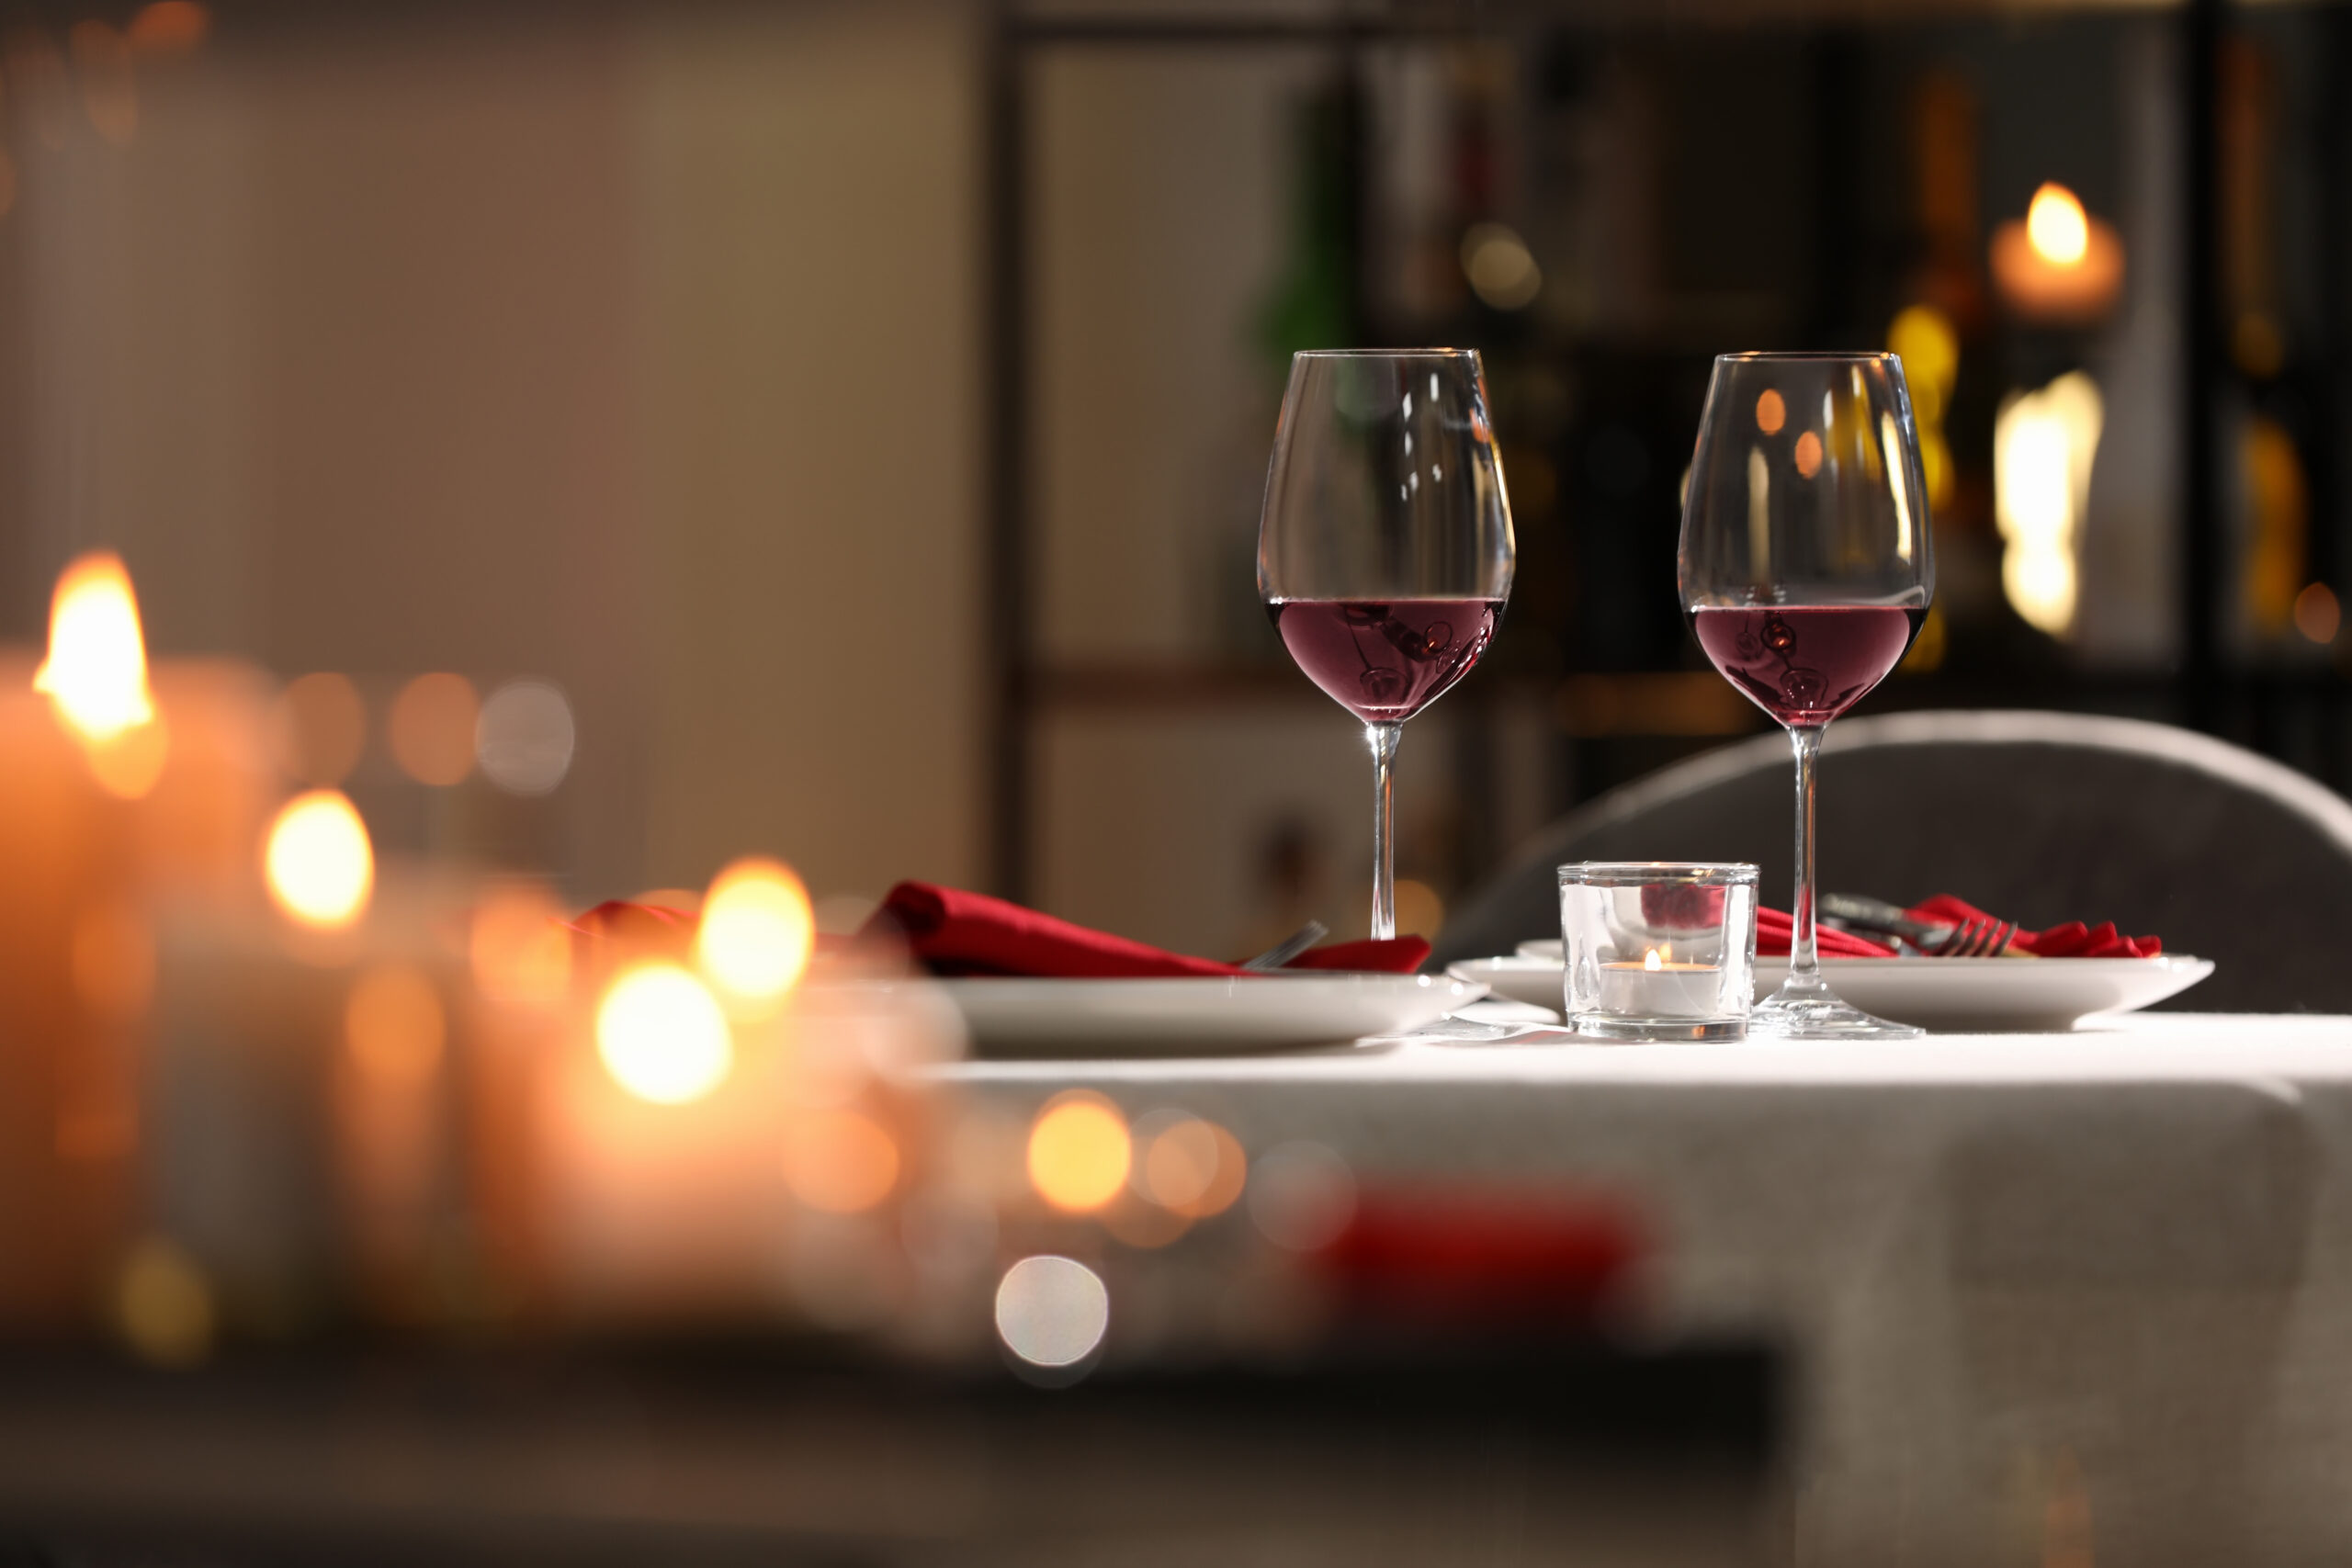 Romantic Dinner - Things to do on Valentine’s Day - Napoleons Casinos & Restaurants